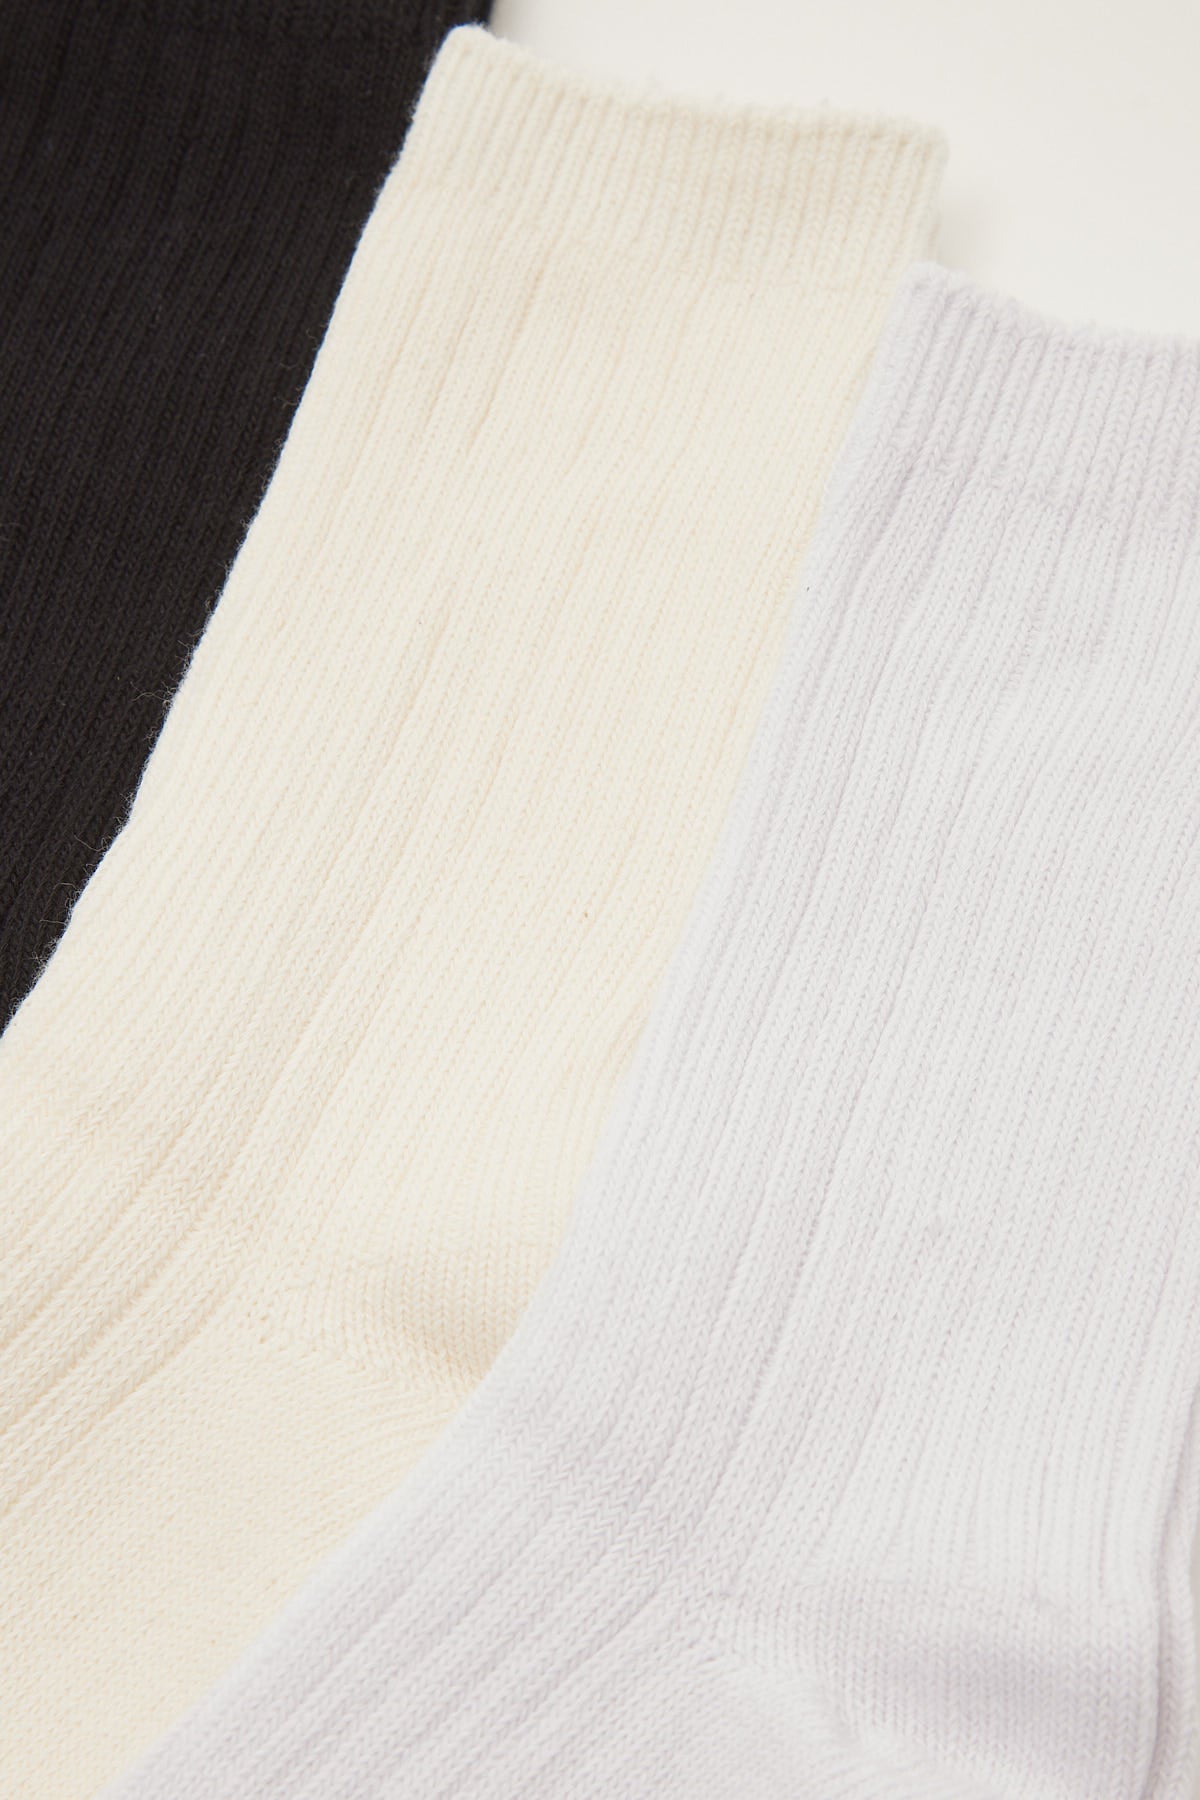 Common Need Cozy Sock 3 Pack Black/Ecru/White